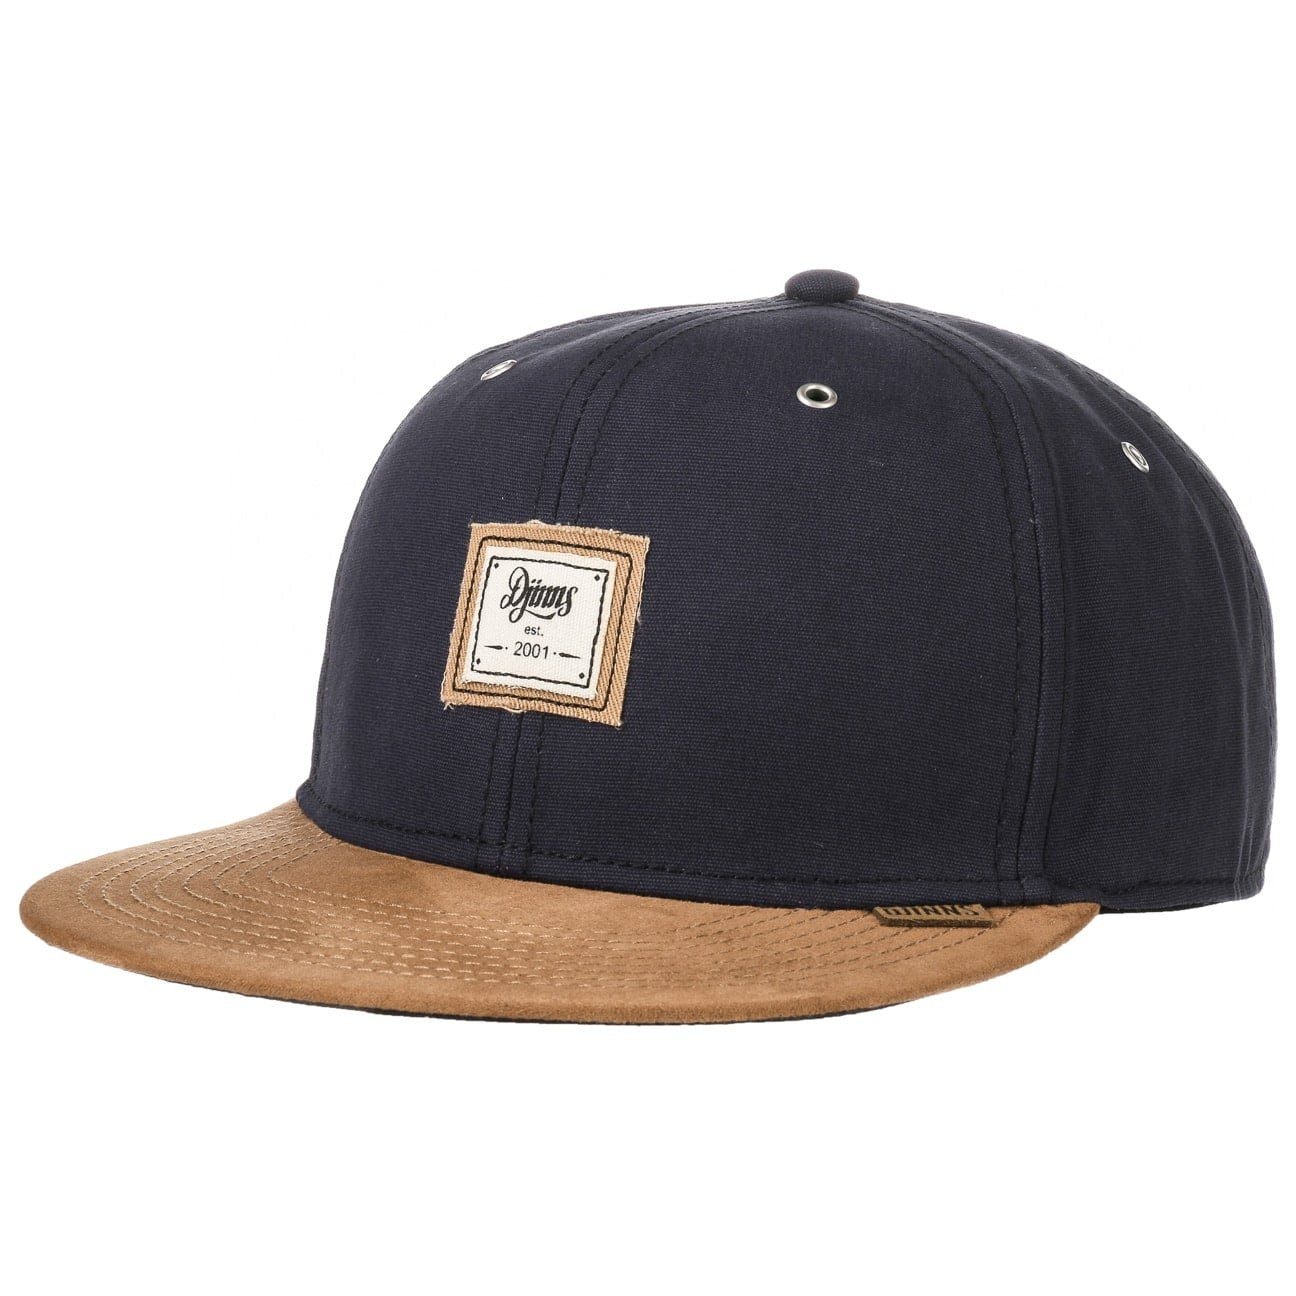 Djinns Baseball Cap (1-St) Cap Snapback schwarz